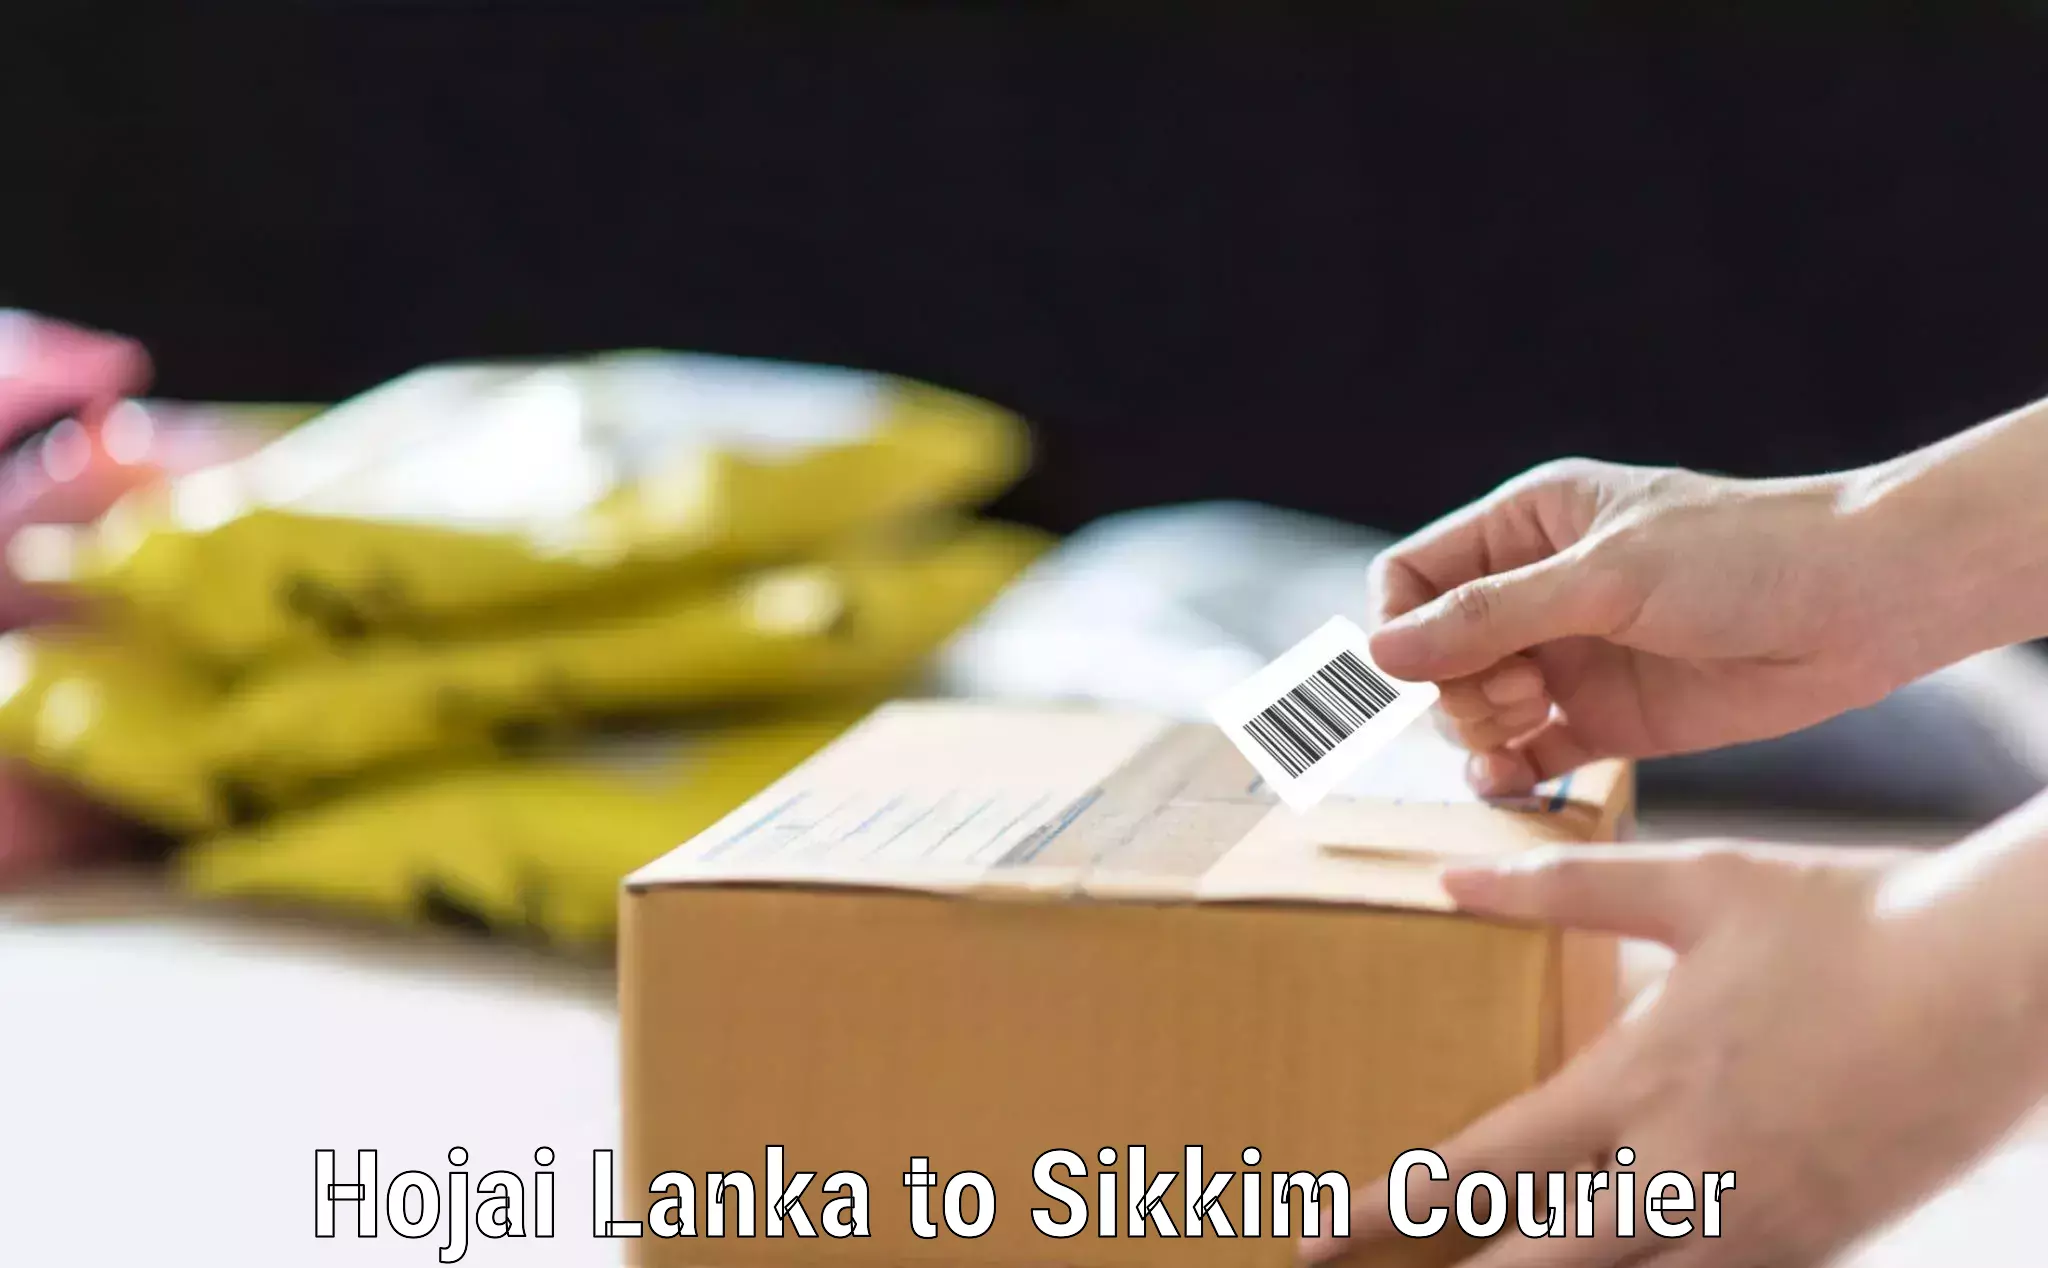 Online luggage shipping booking Hojai Lanka to Rangpo